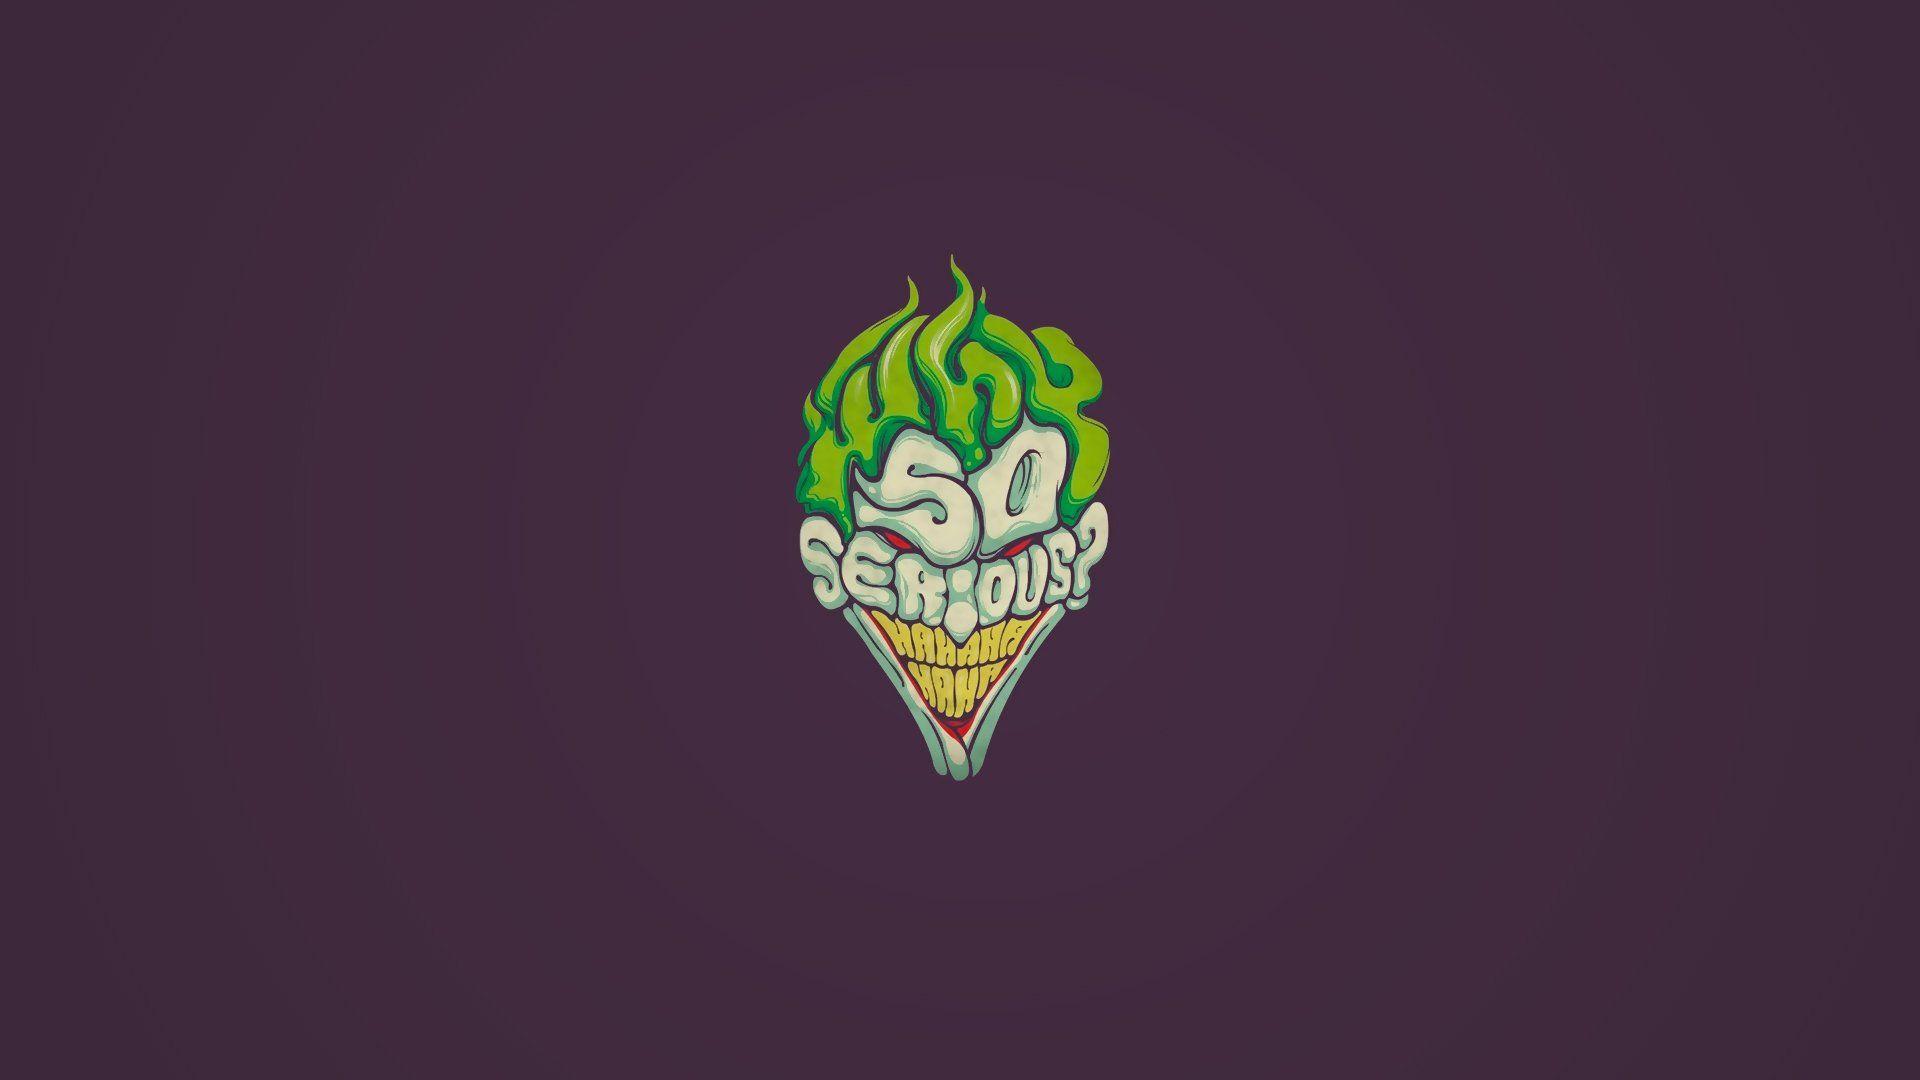 Joker Minimal Wallpapers - Top Free Joker Minimal Backgrounds ...